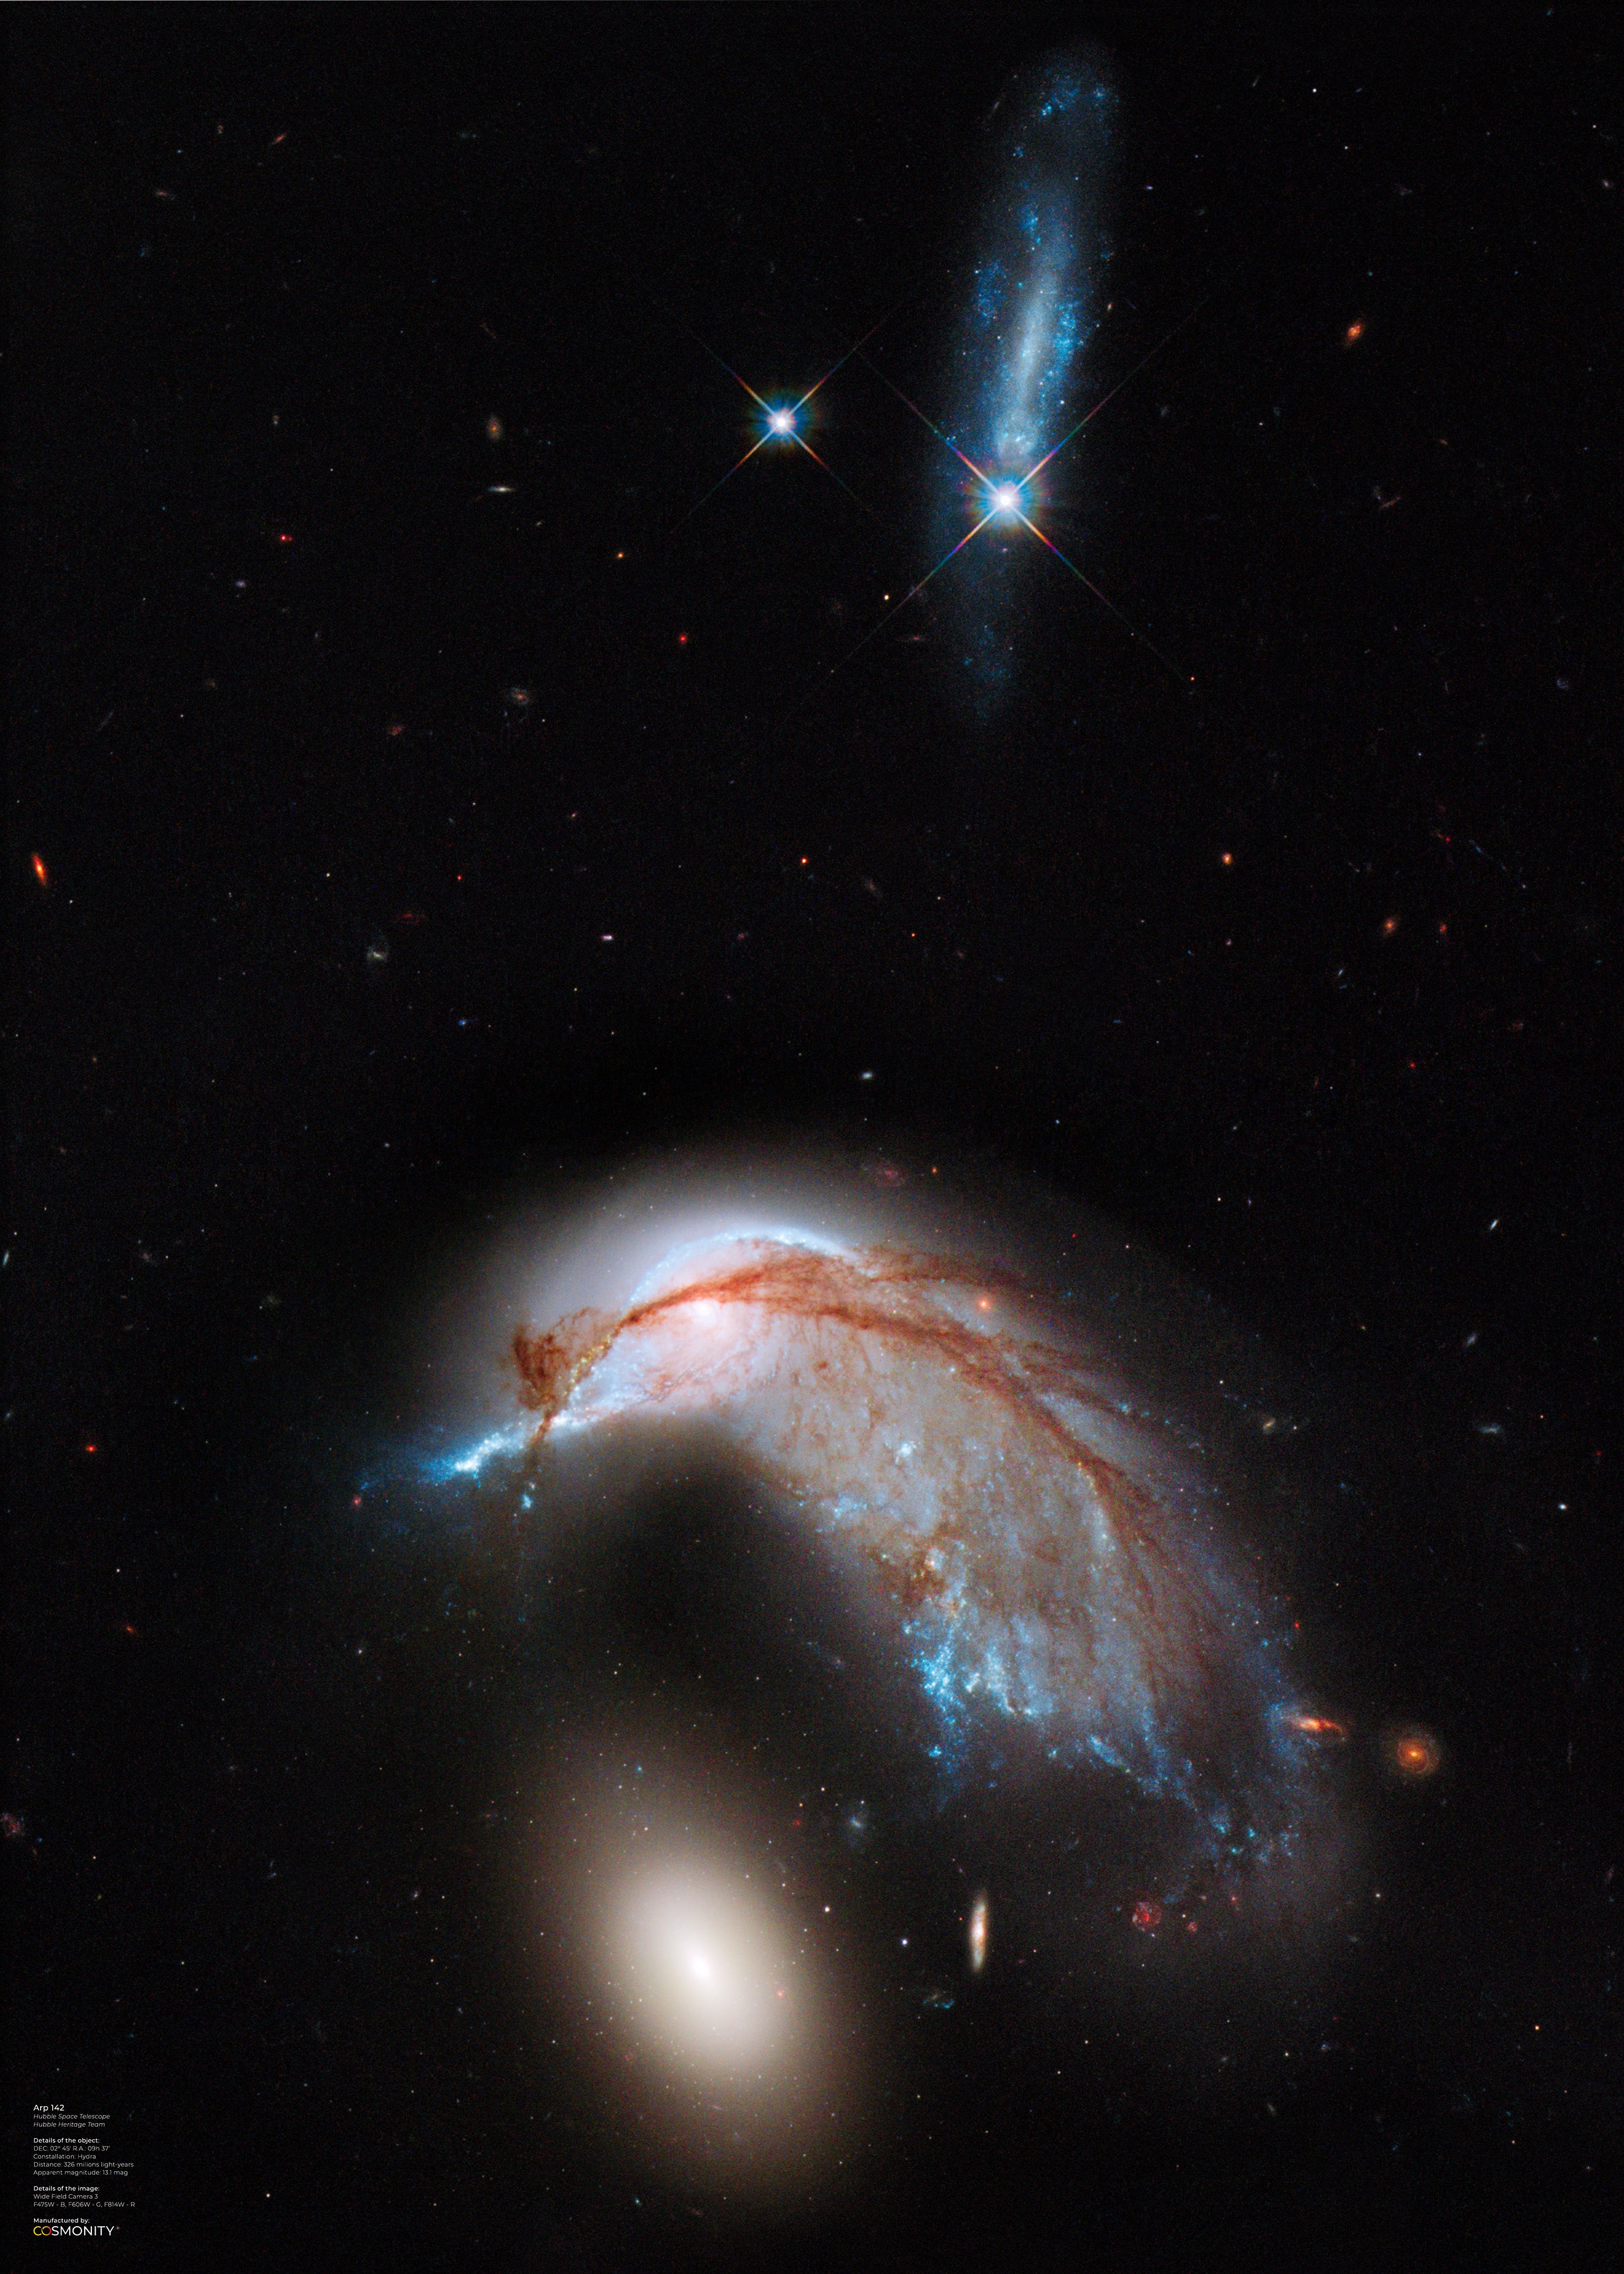 Penguin Galaxy - Arp 142